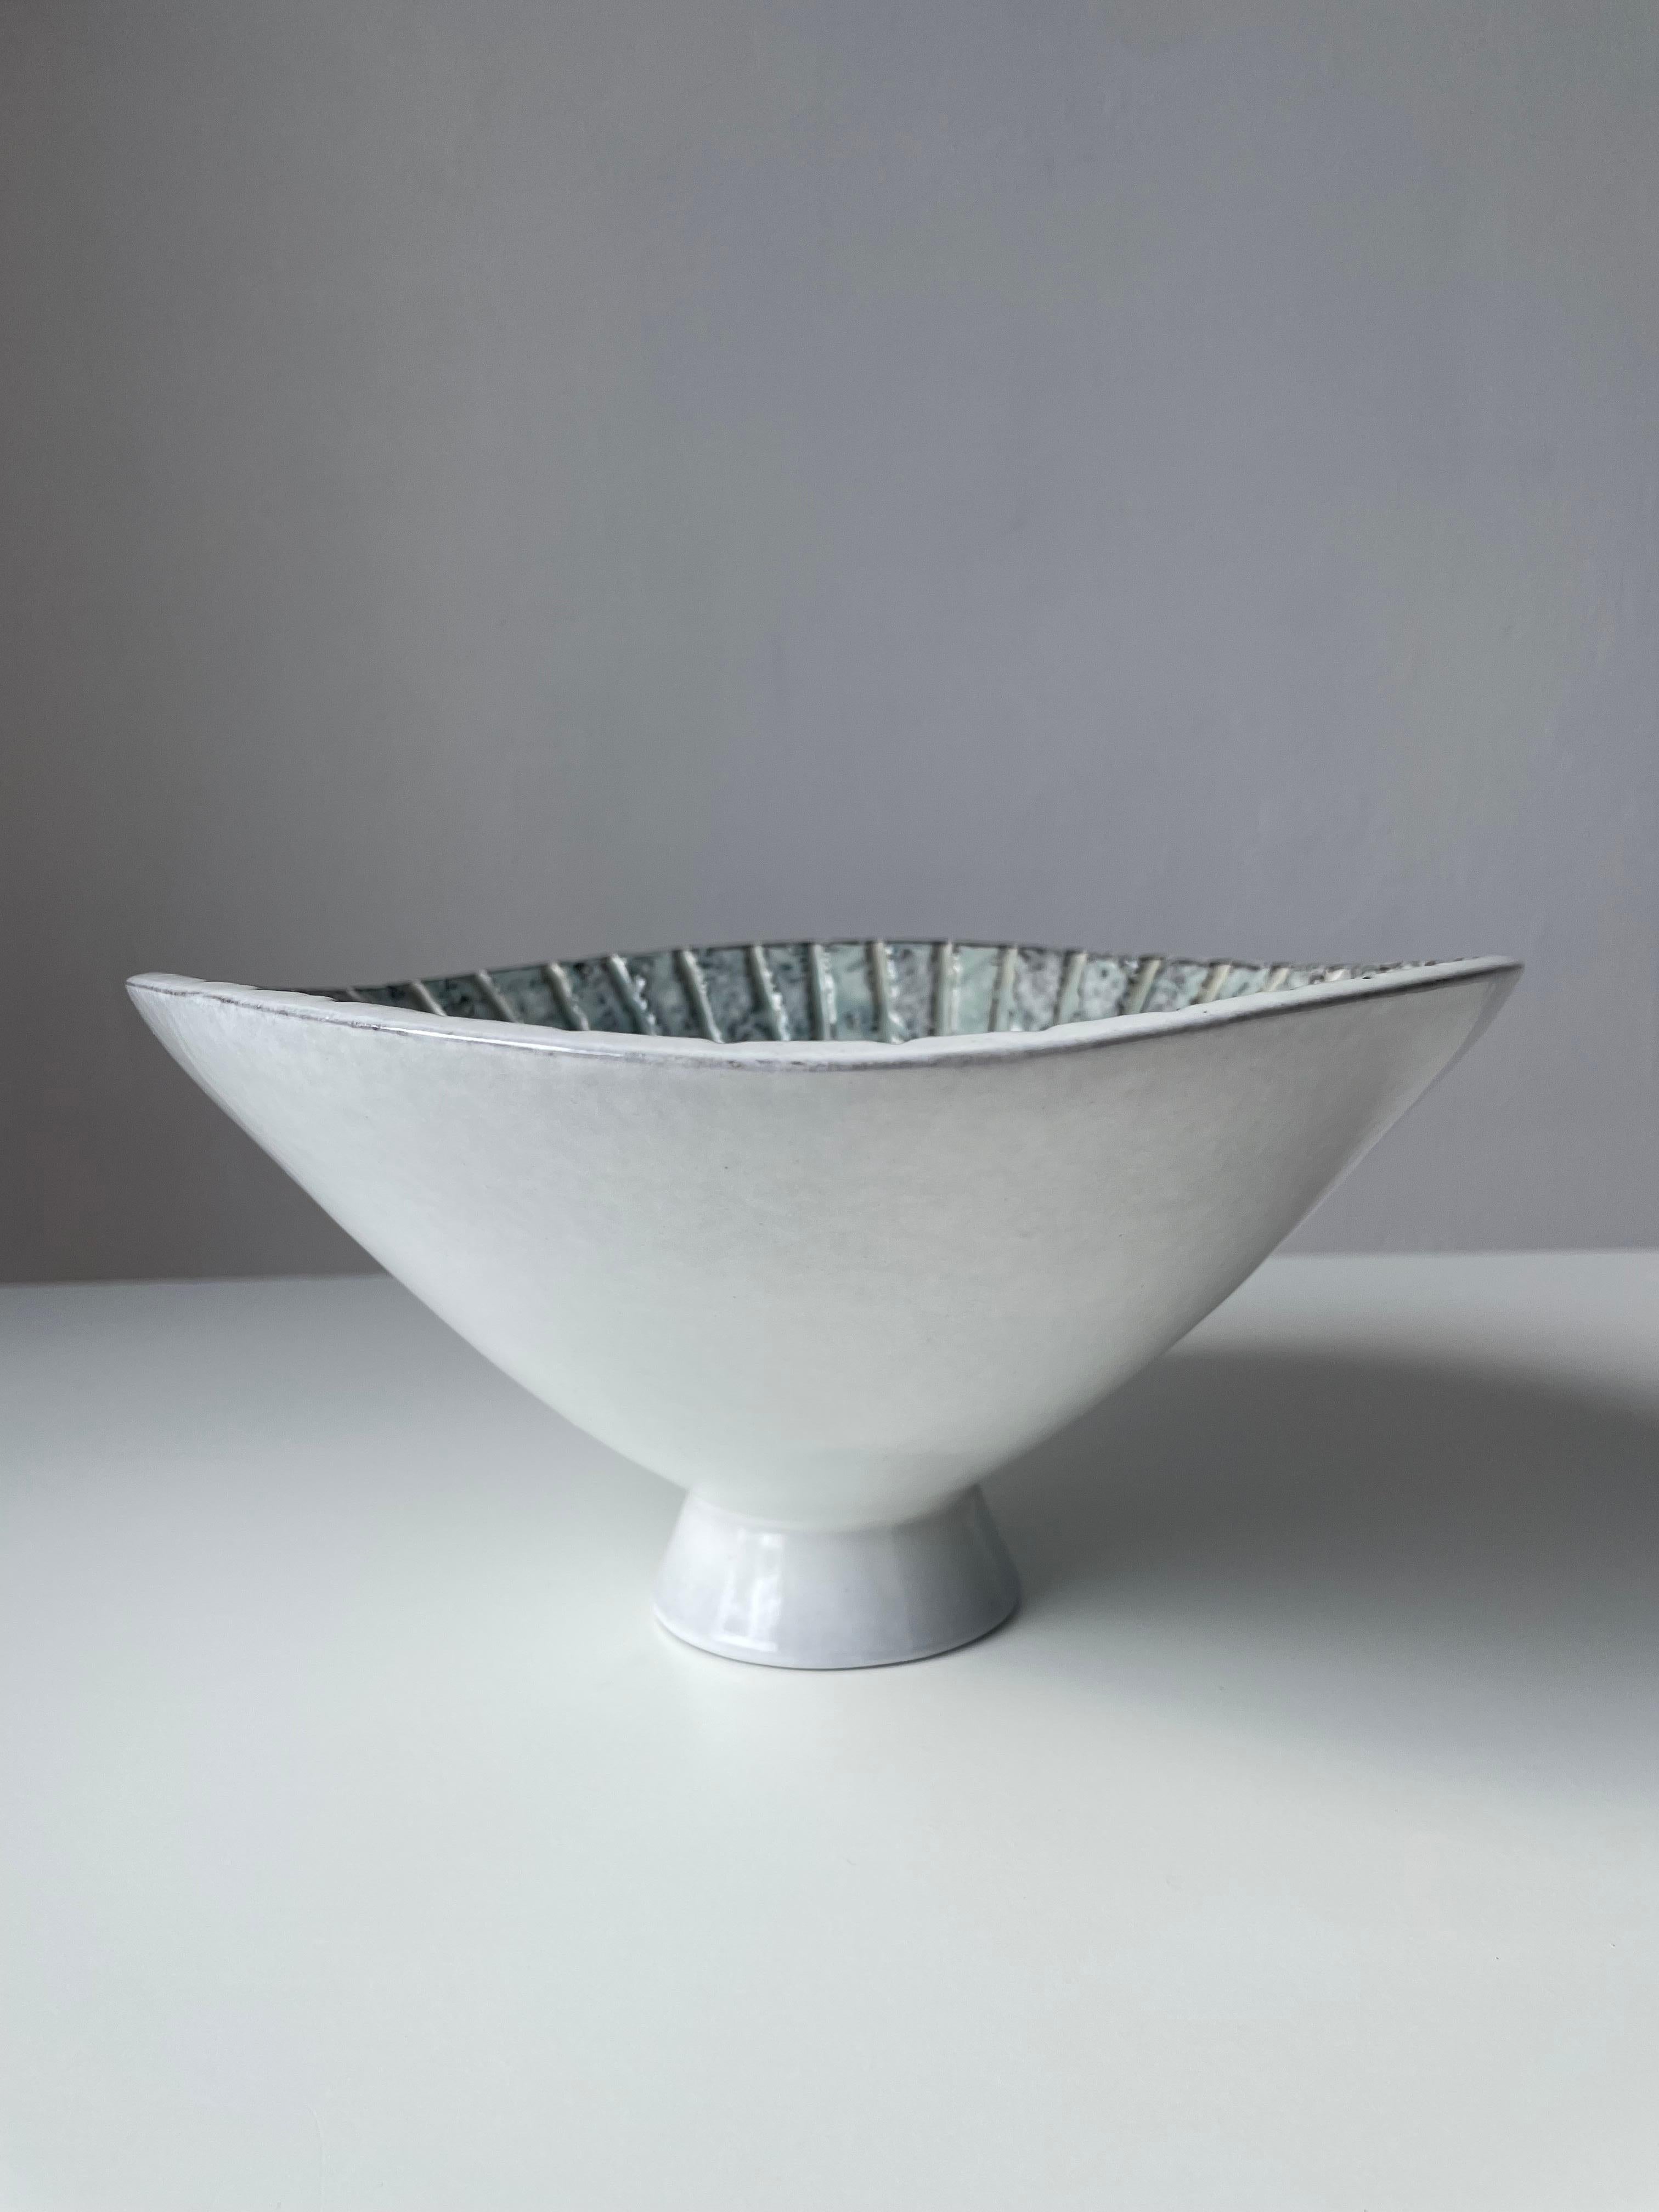 Upsala Ekeby Modern 1960s Sculptural Centerpiece Bowl For Sale 1